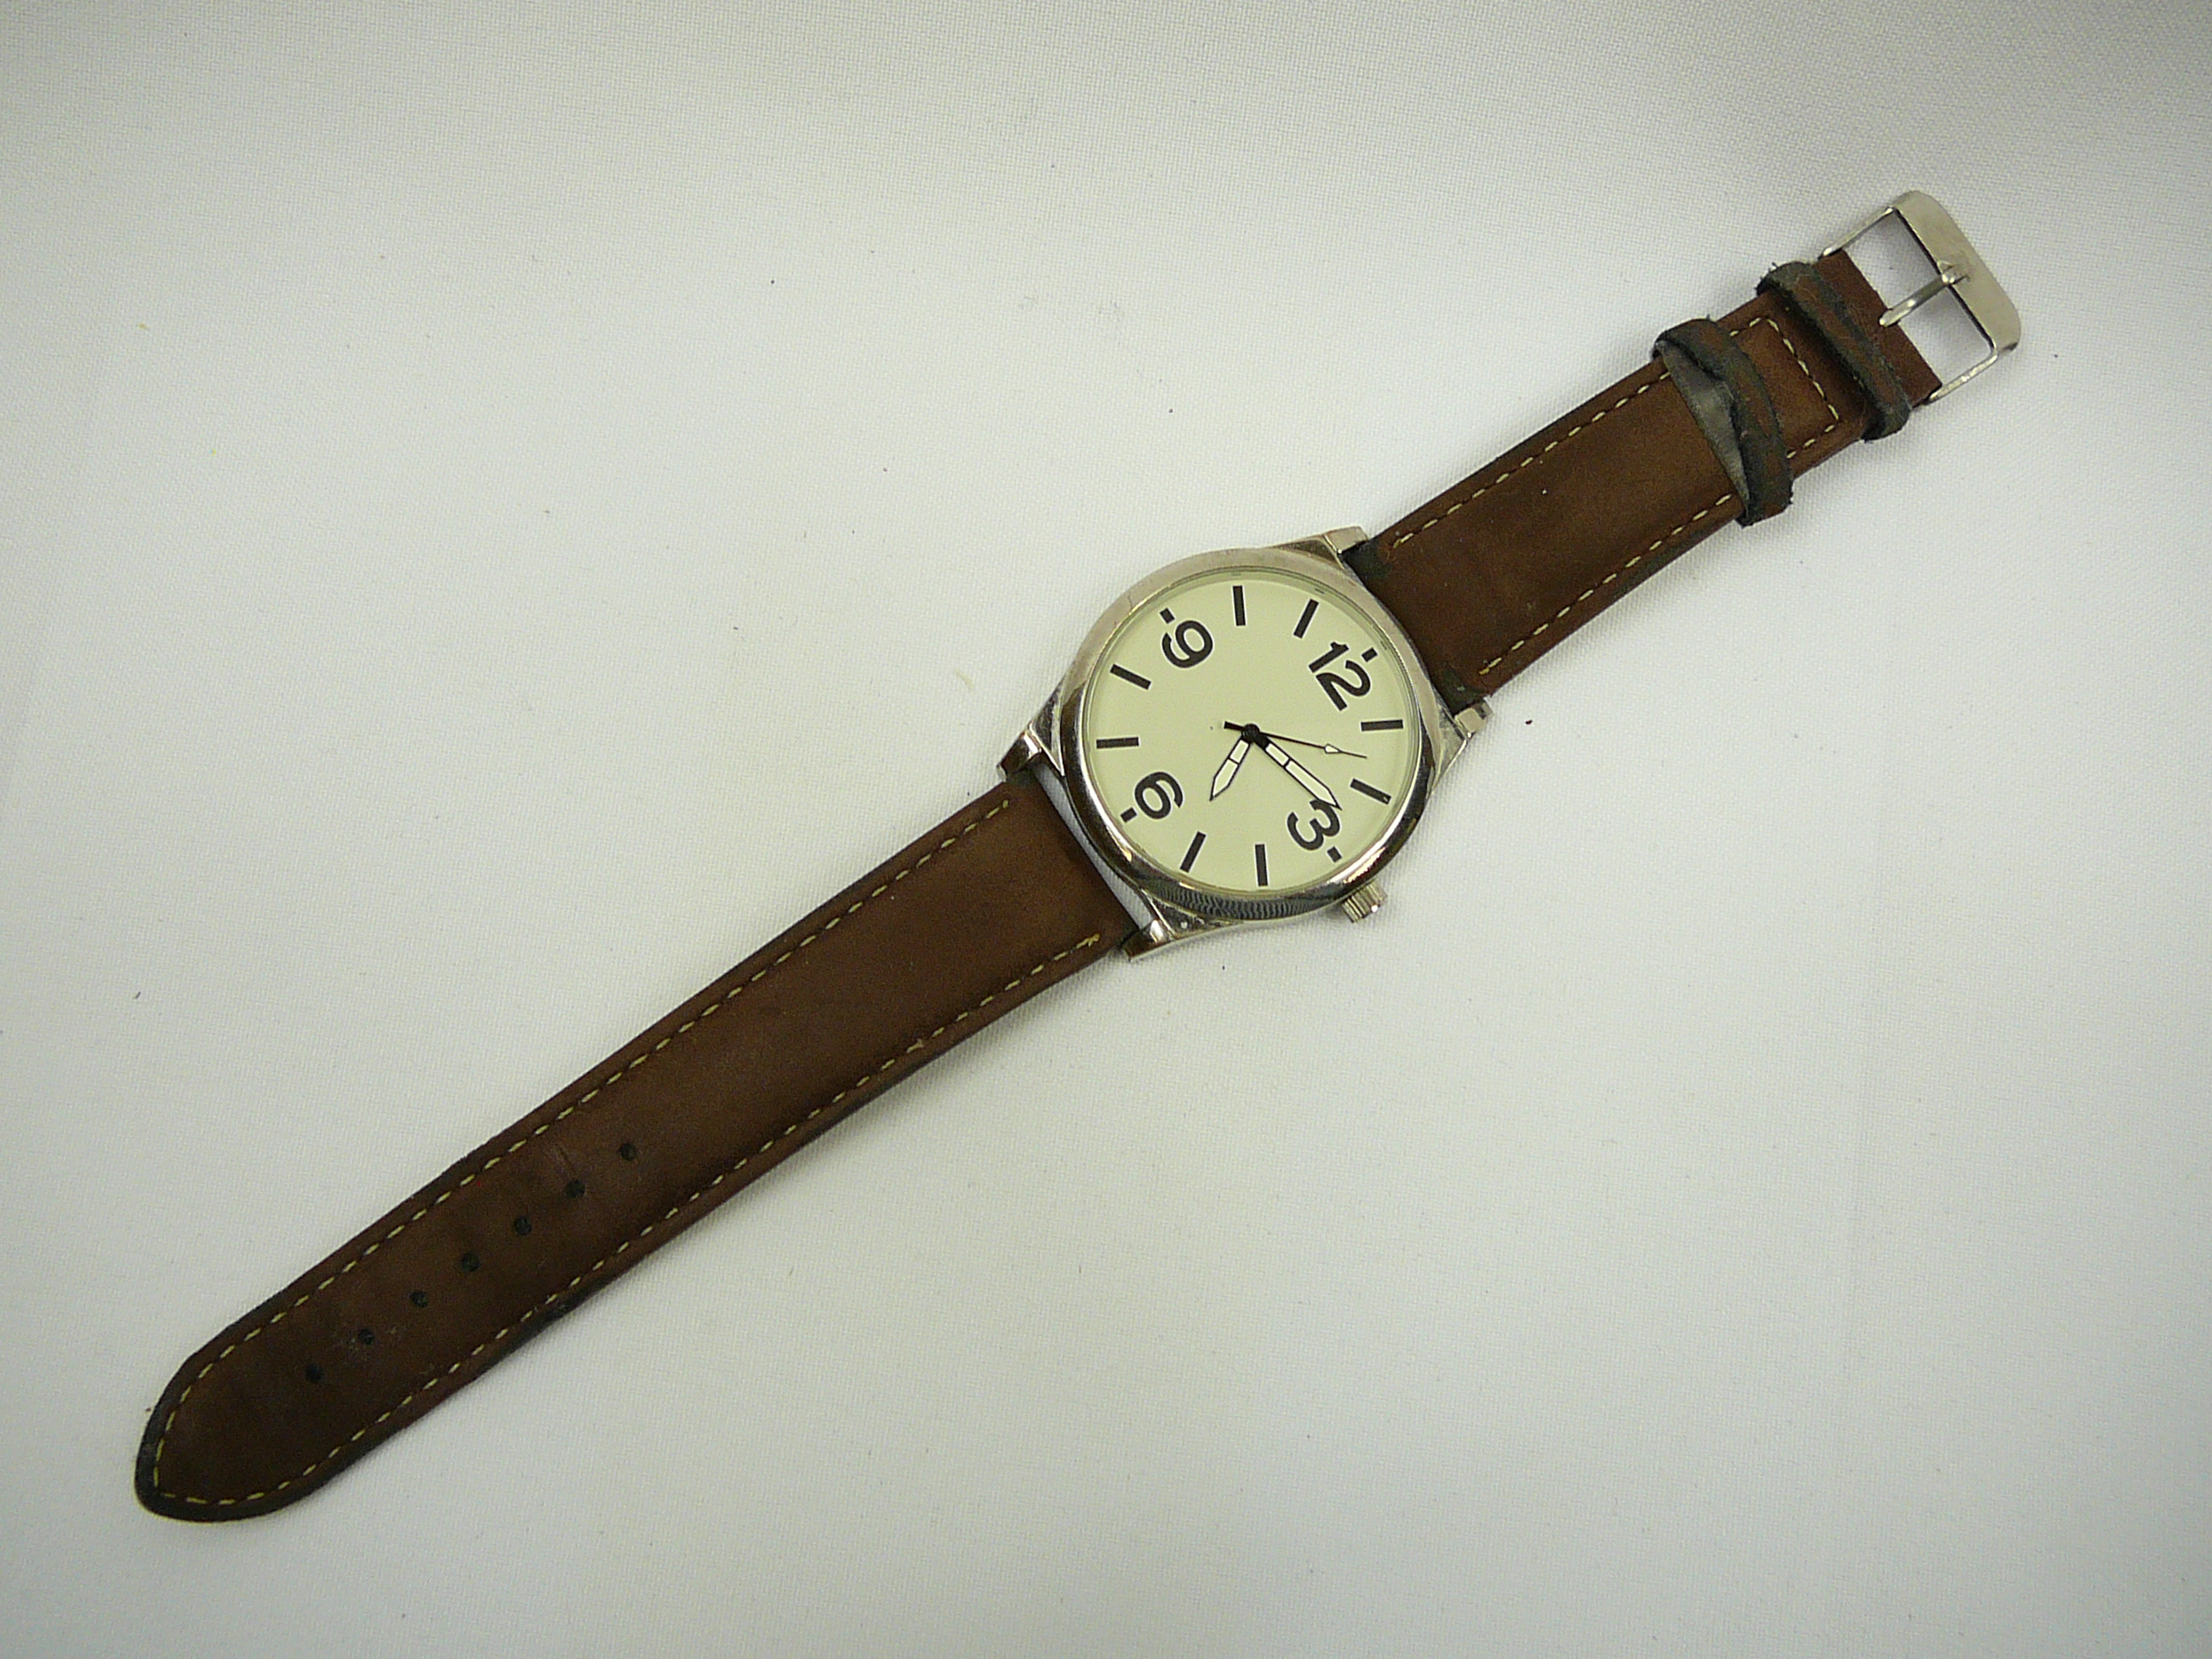 Modern quartz watch - Image 2 of 3